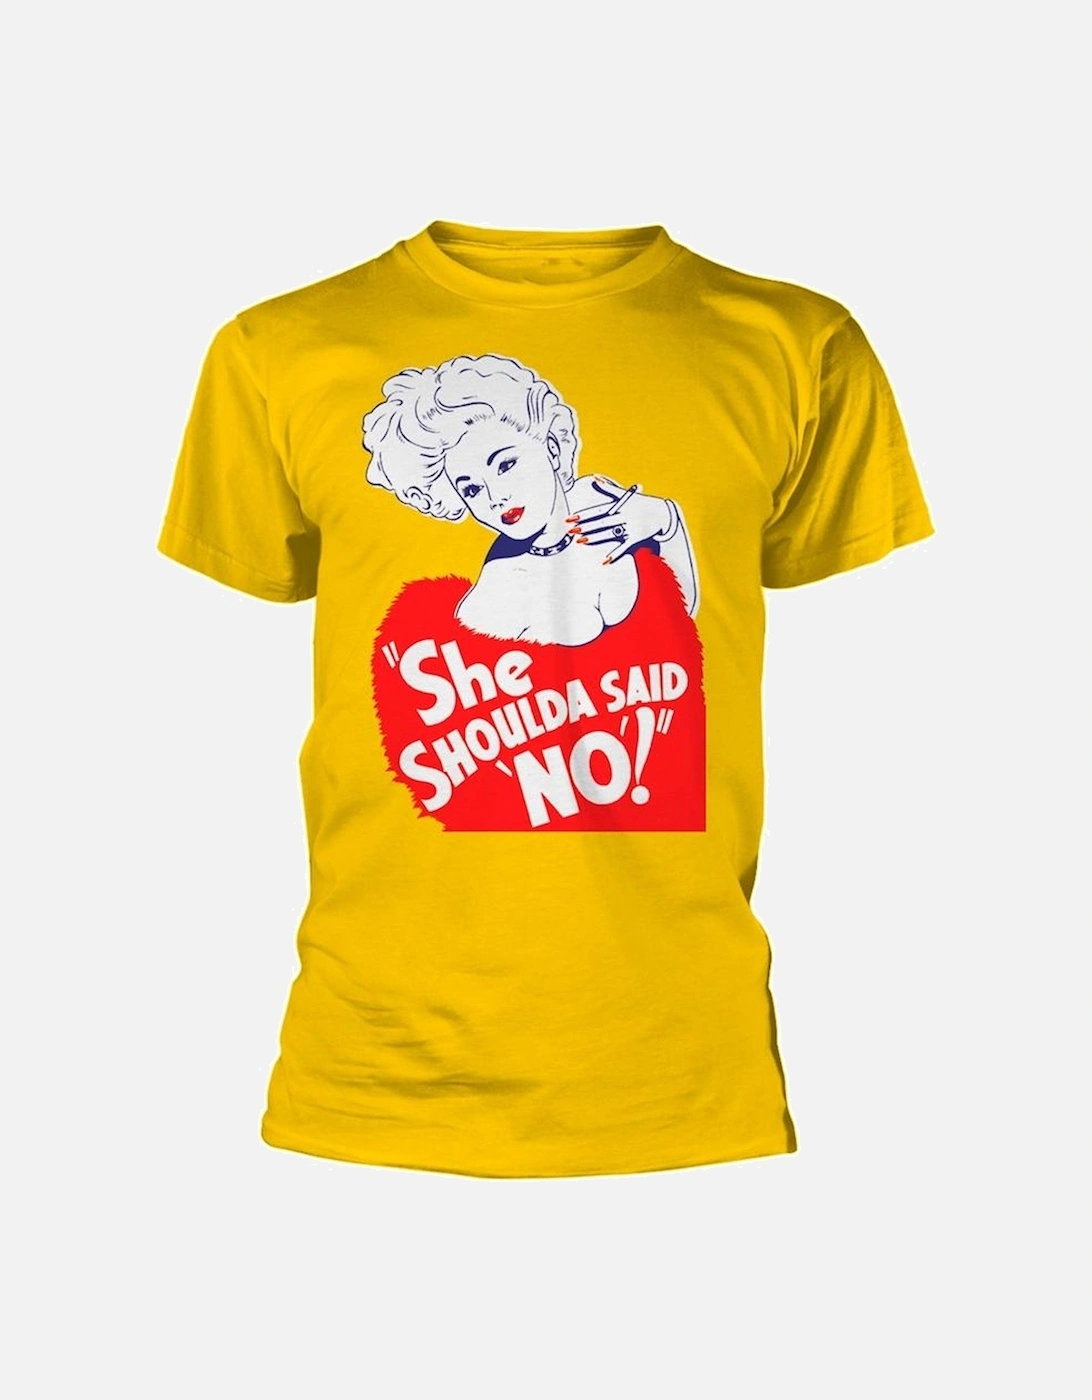 Unisex Adult She Shoulda Said No! T-Shirt, 3 of 2